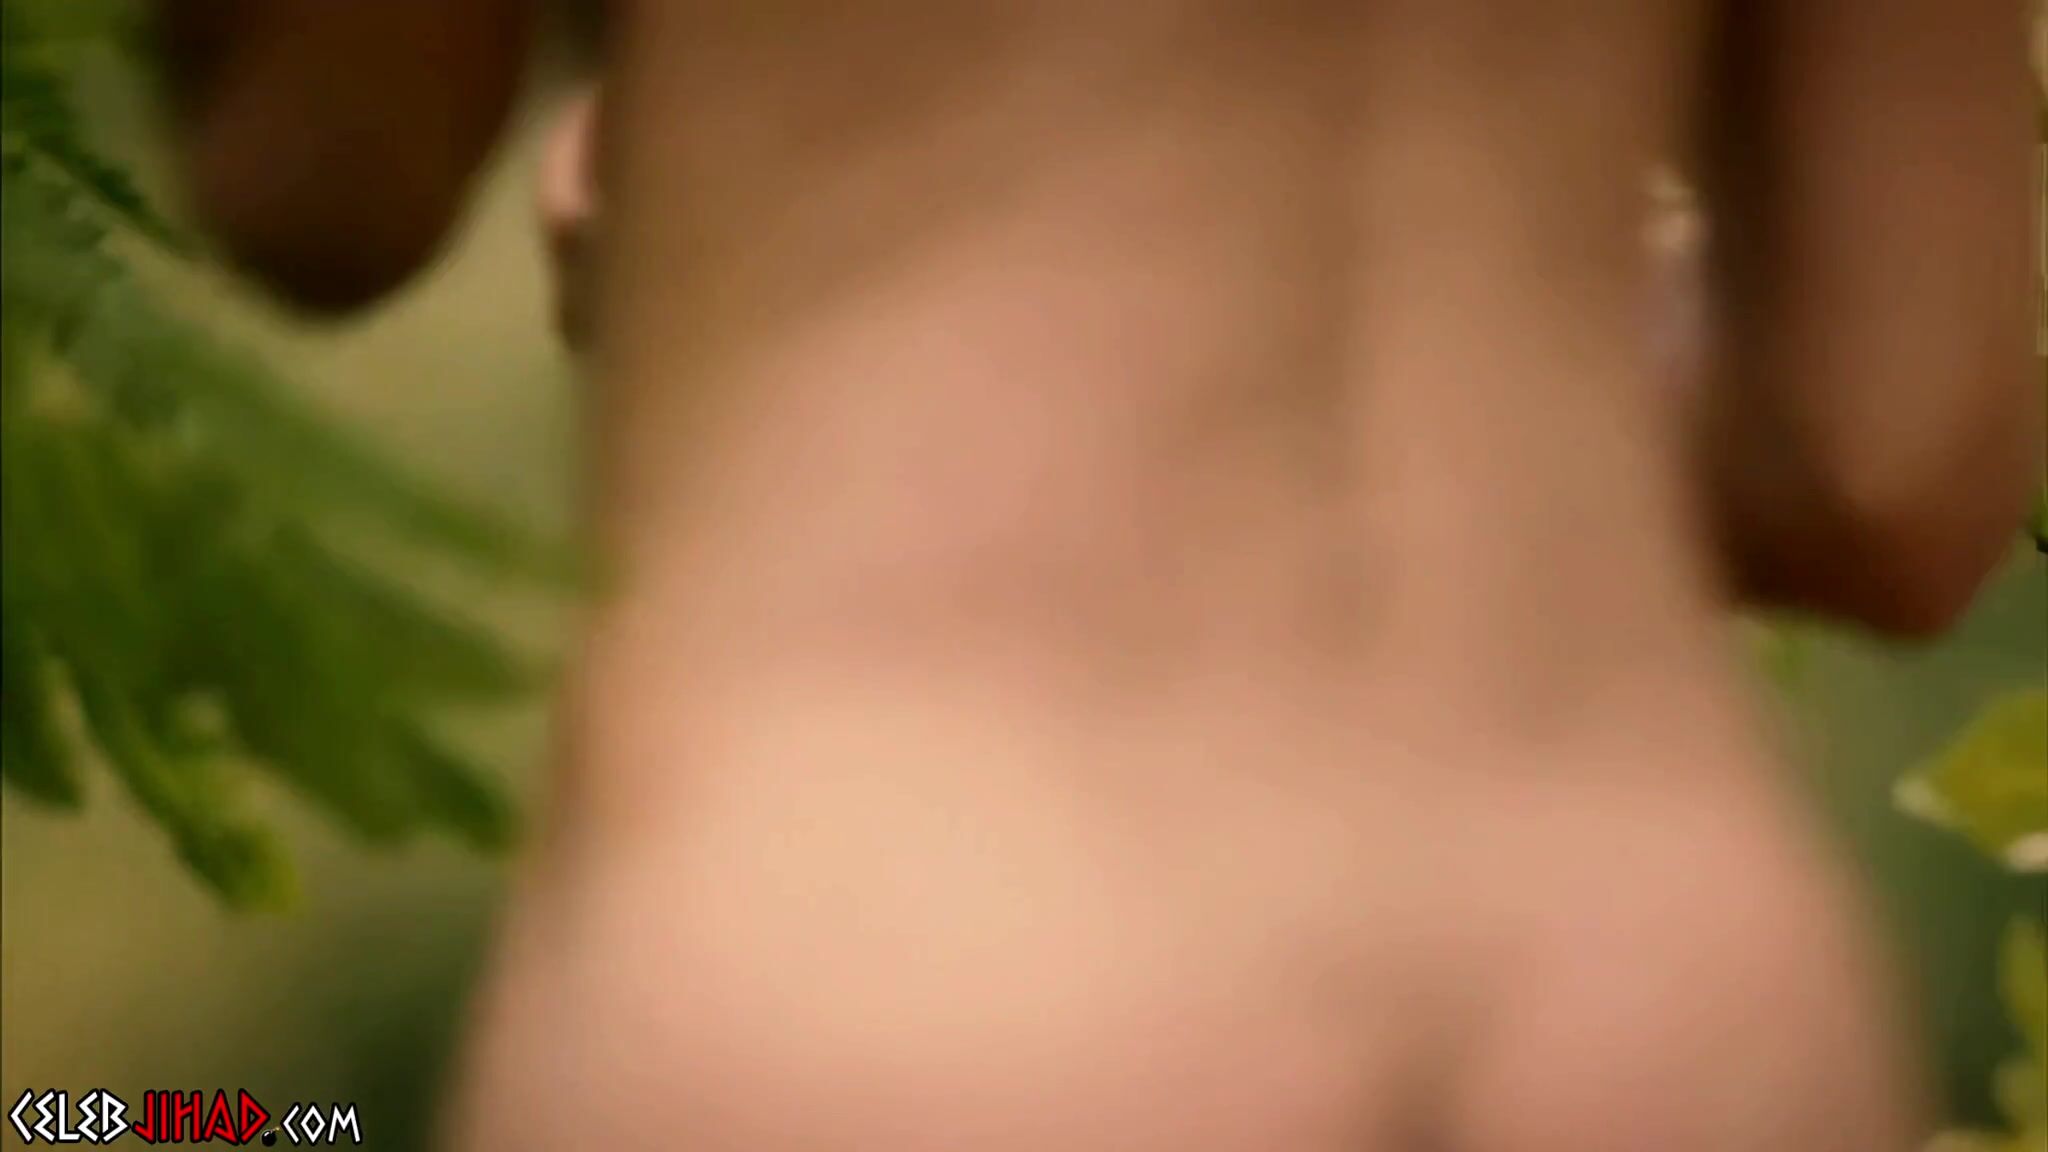 Hot Violett Beane Nude Scene From -Leftovers- Enhanced - ViralPornhub.com